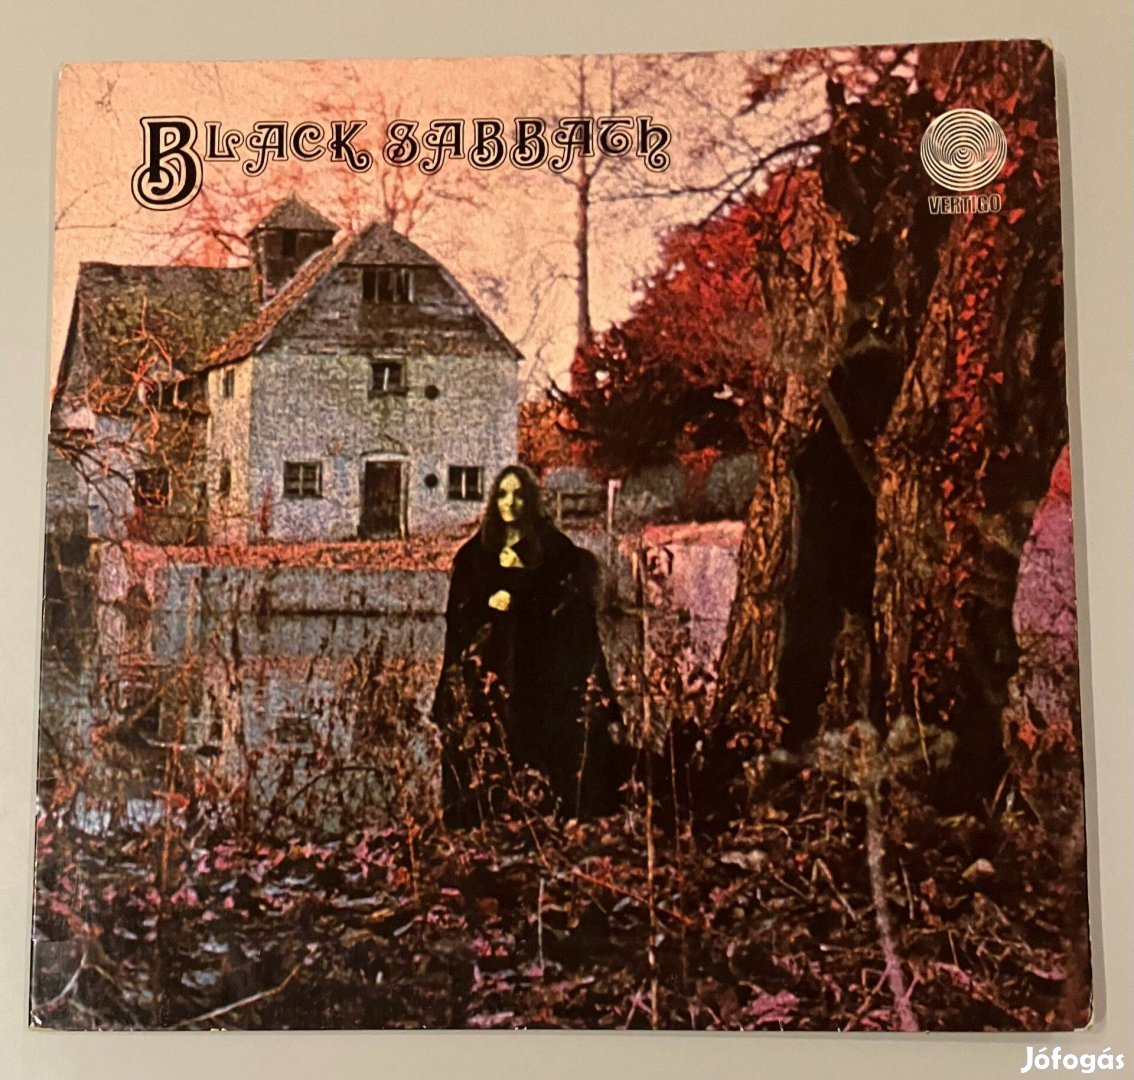 Black Sabbath - Black Sabbath (Made in Germany, Vertigo Swirl)